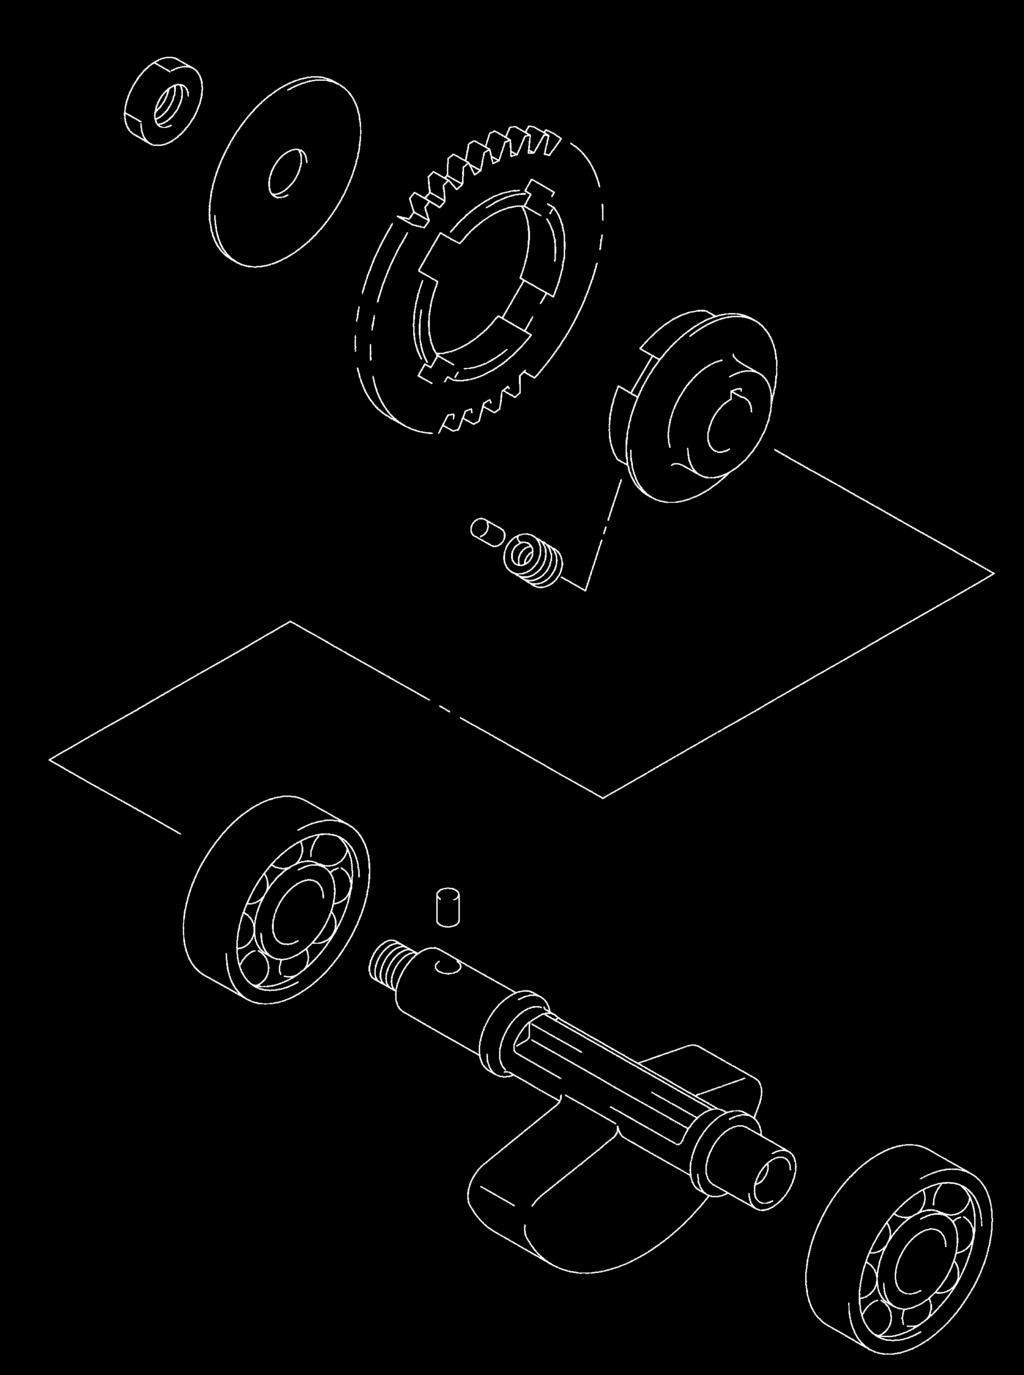 3-34 ENGINE BALANCER SHAFT AND BALANCER DRIVEN GEAR DISASSEMBLY Disassemble the balancer shaft as shown in the illustration.